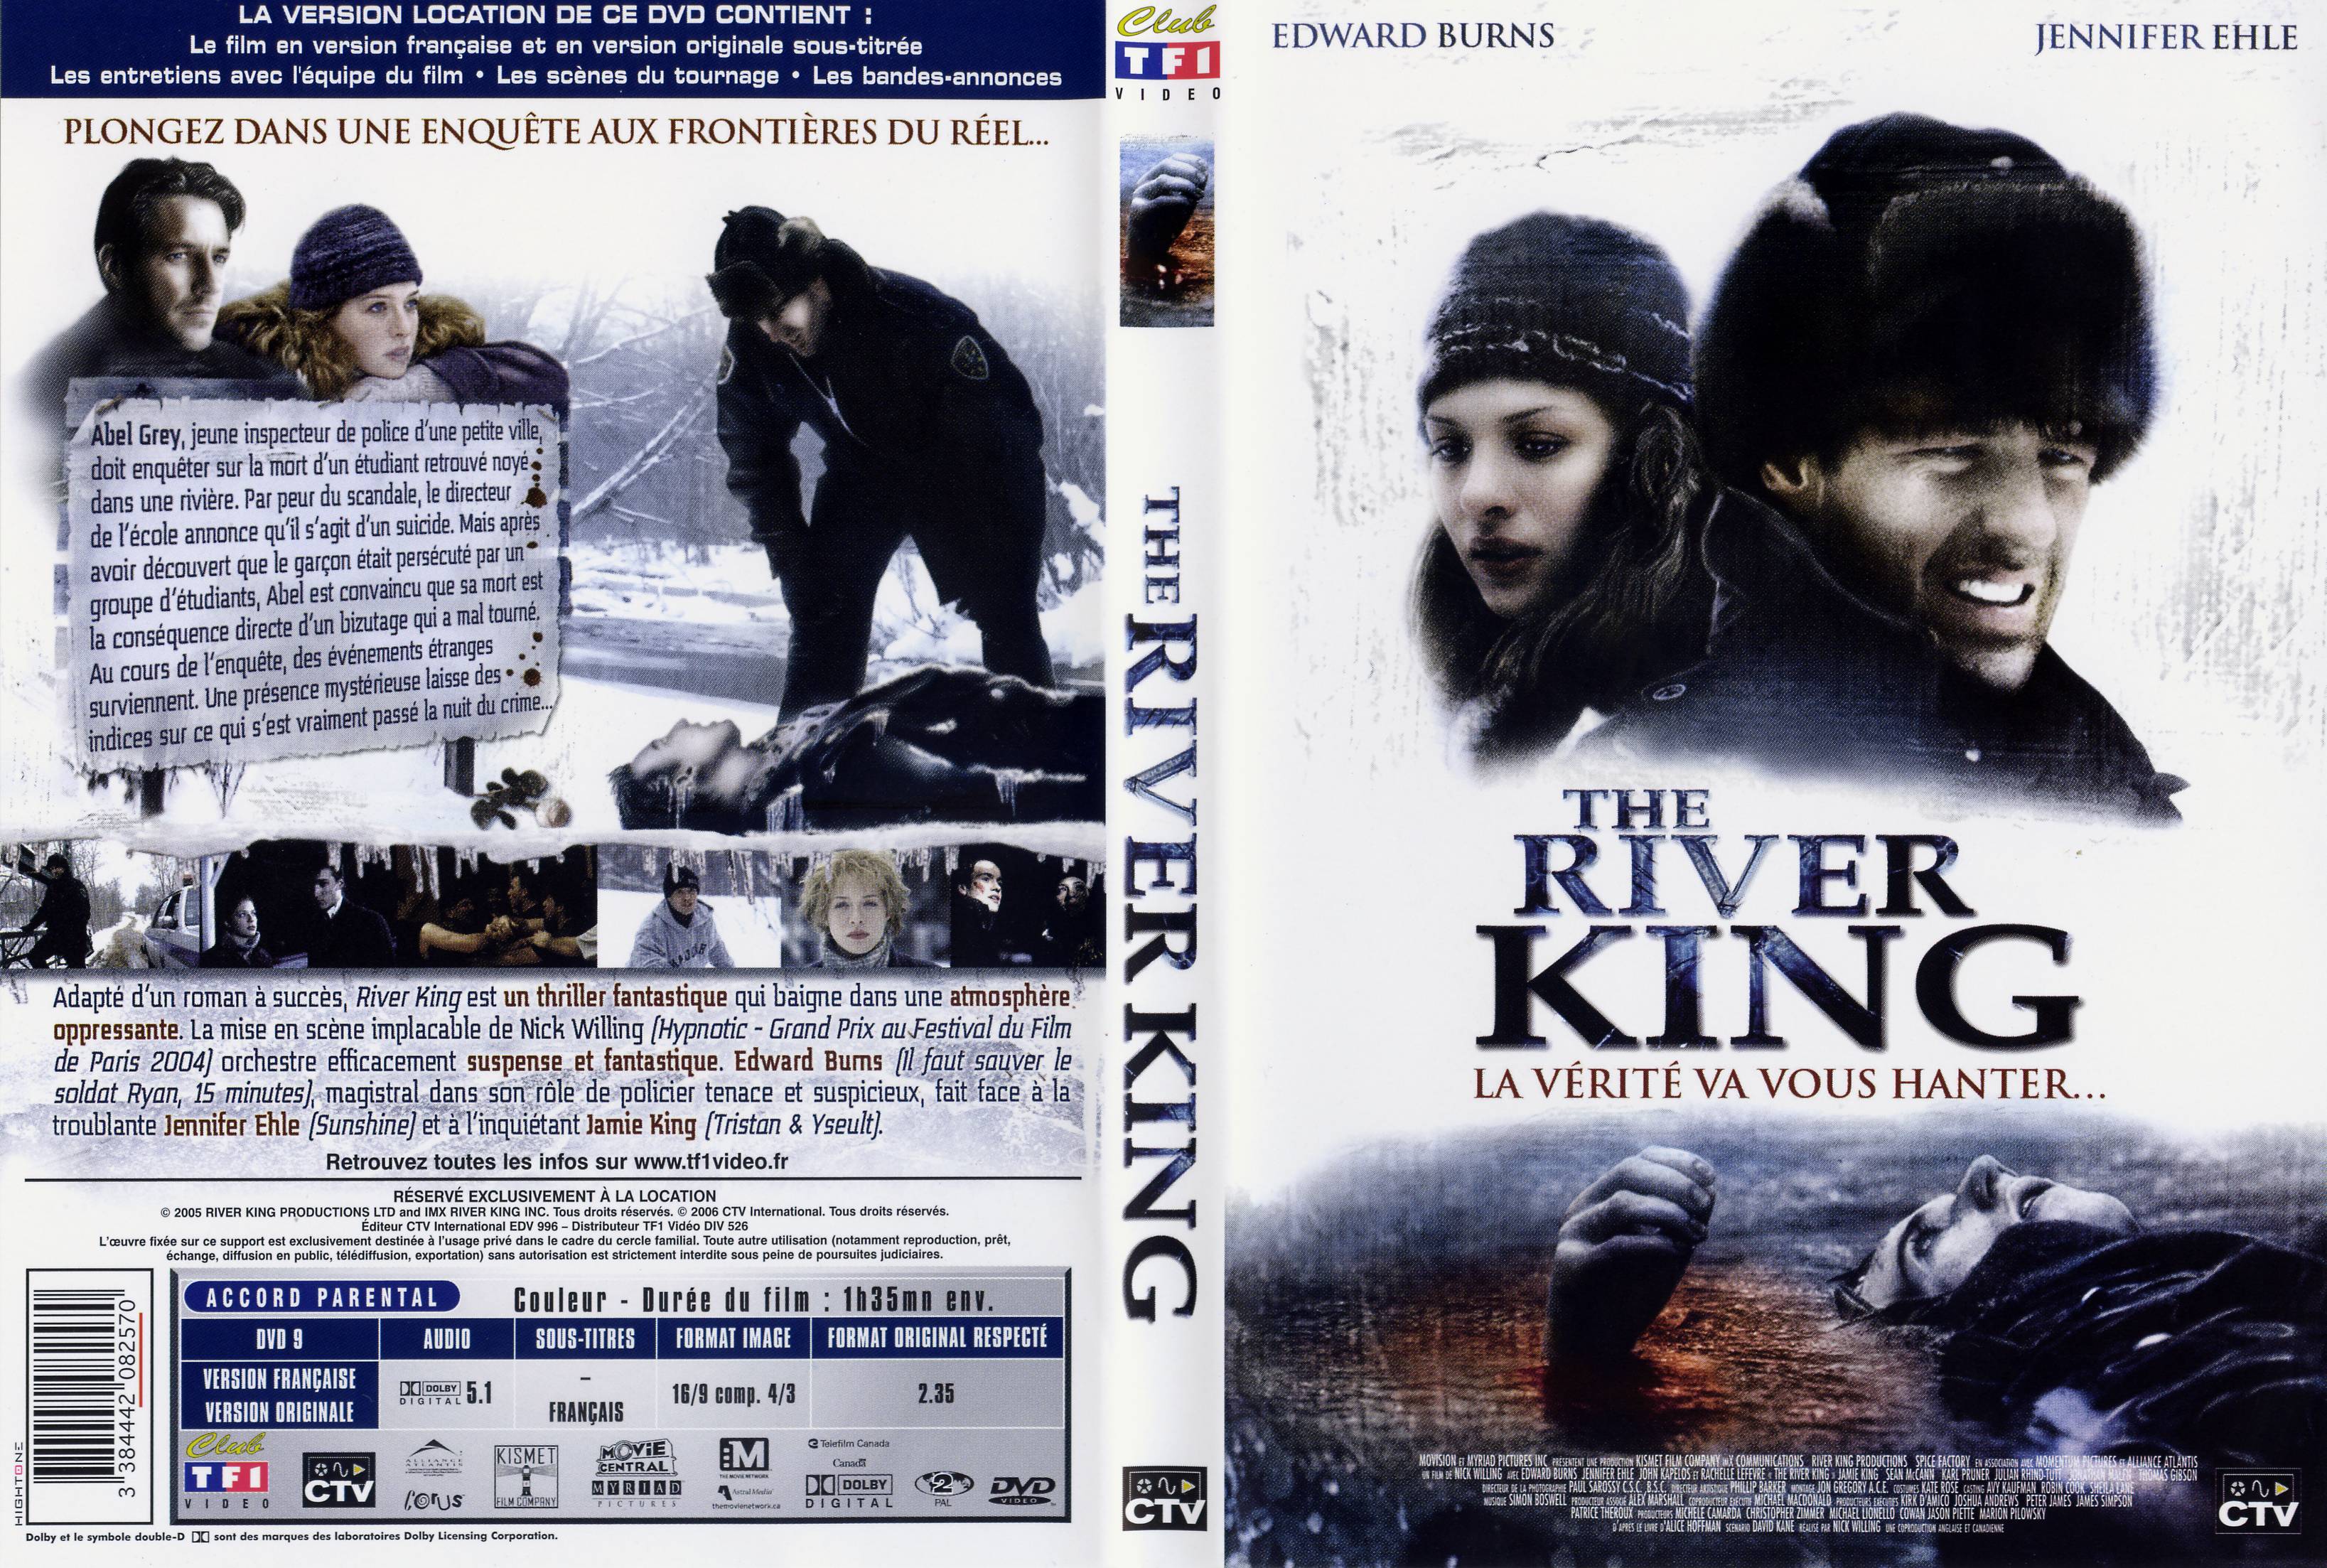 Jaquette DVD The river king v2